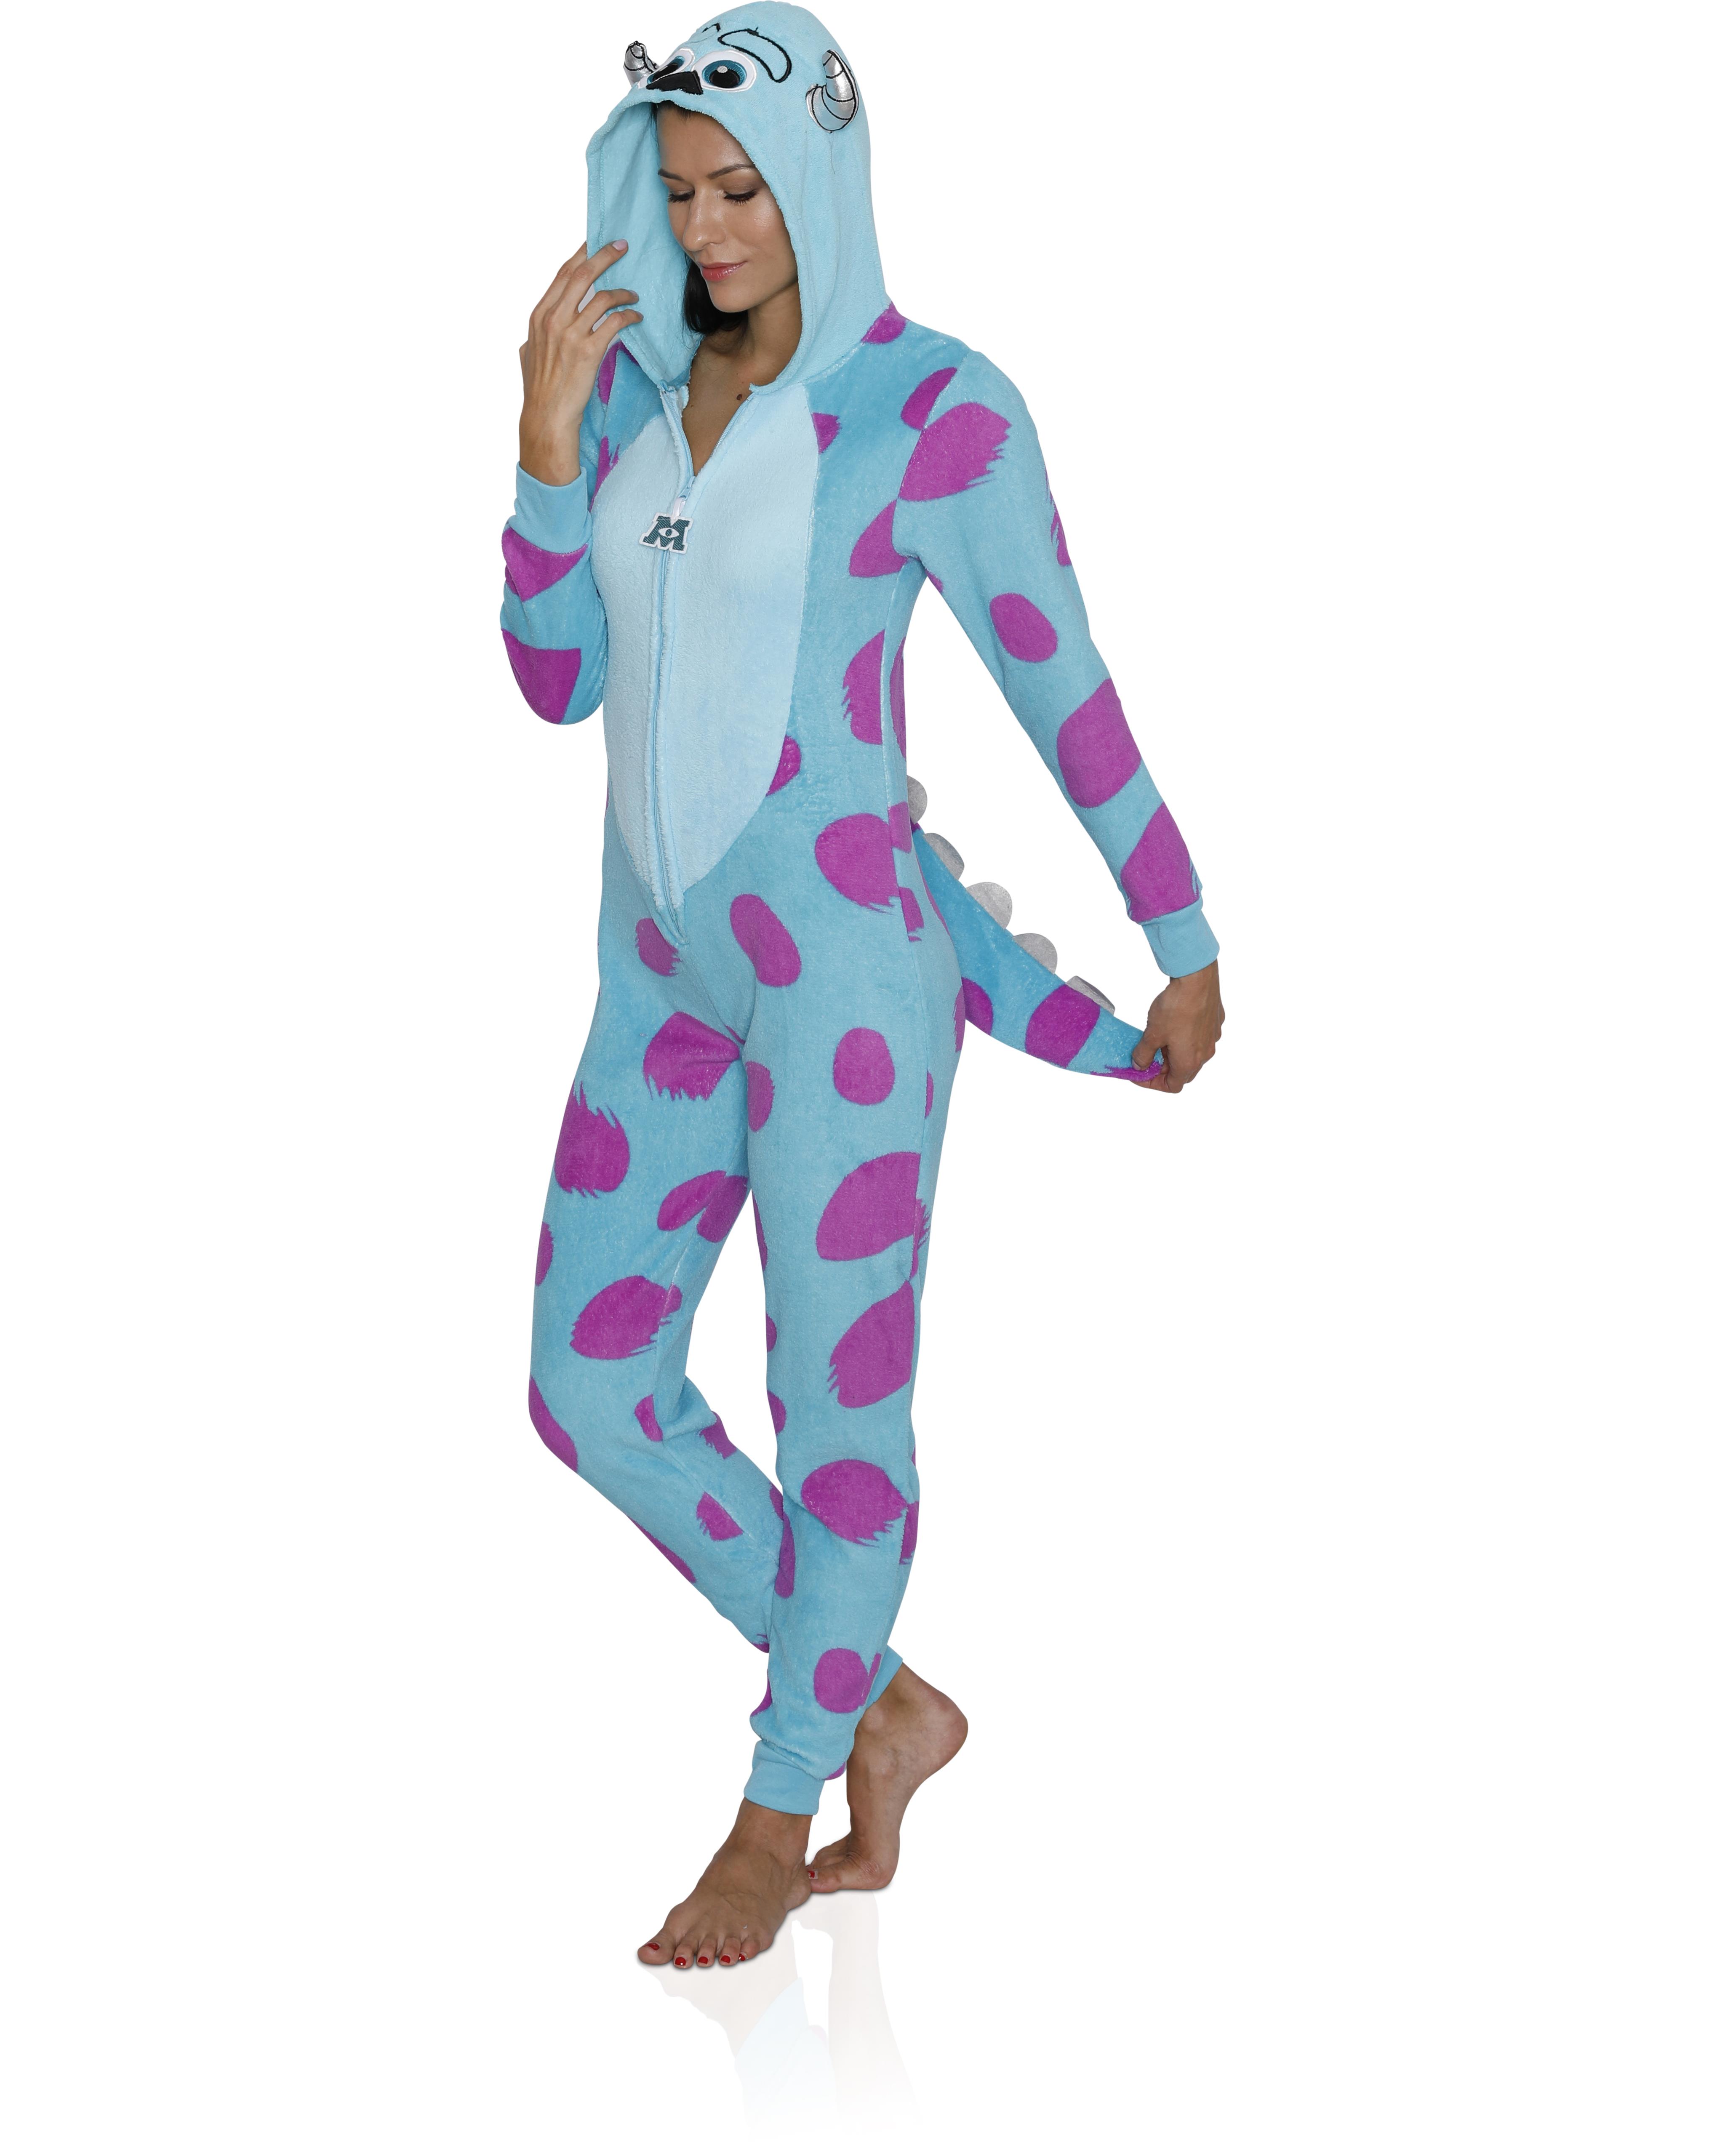 Women's Union Suit Disney Costume Onesie Plush Adult Pajama, Sulley_H, Size: Large - image 1 of 3